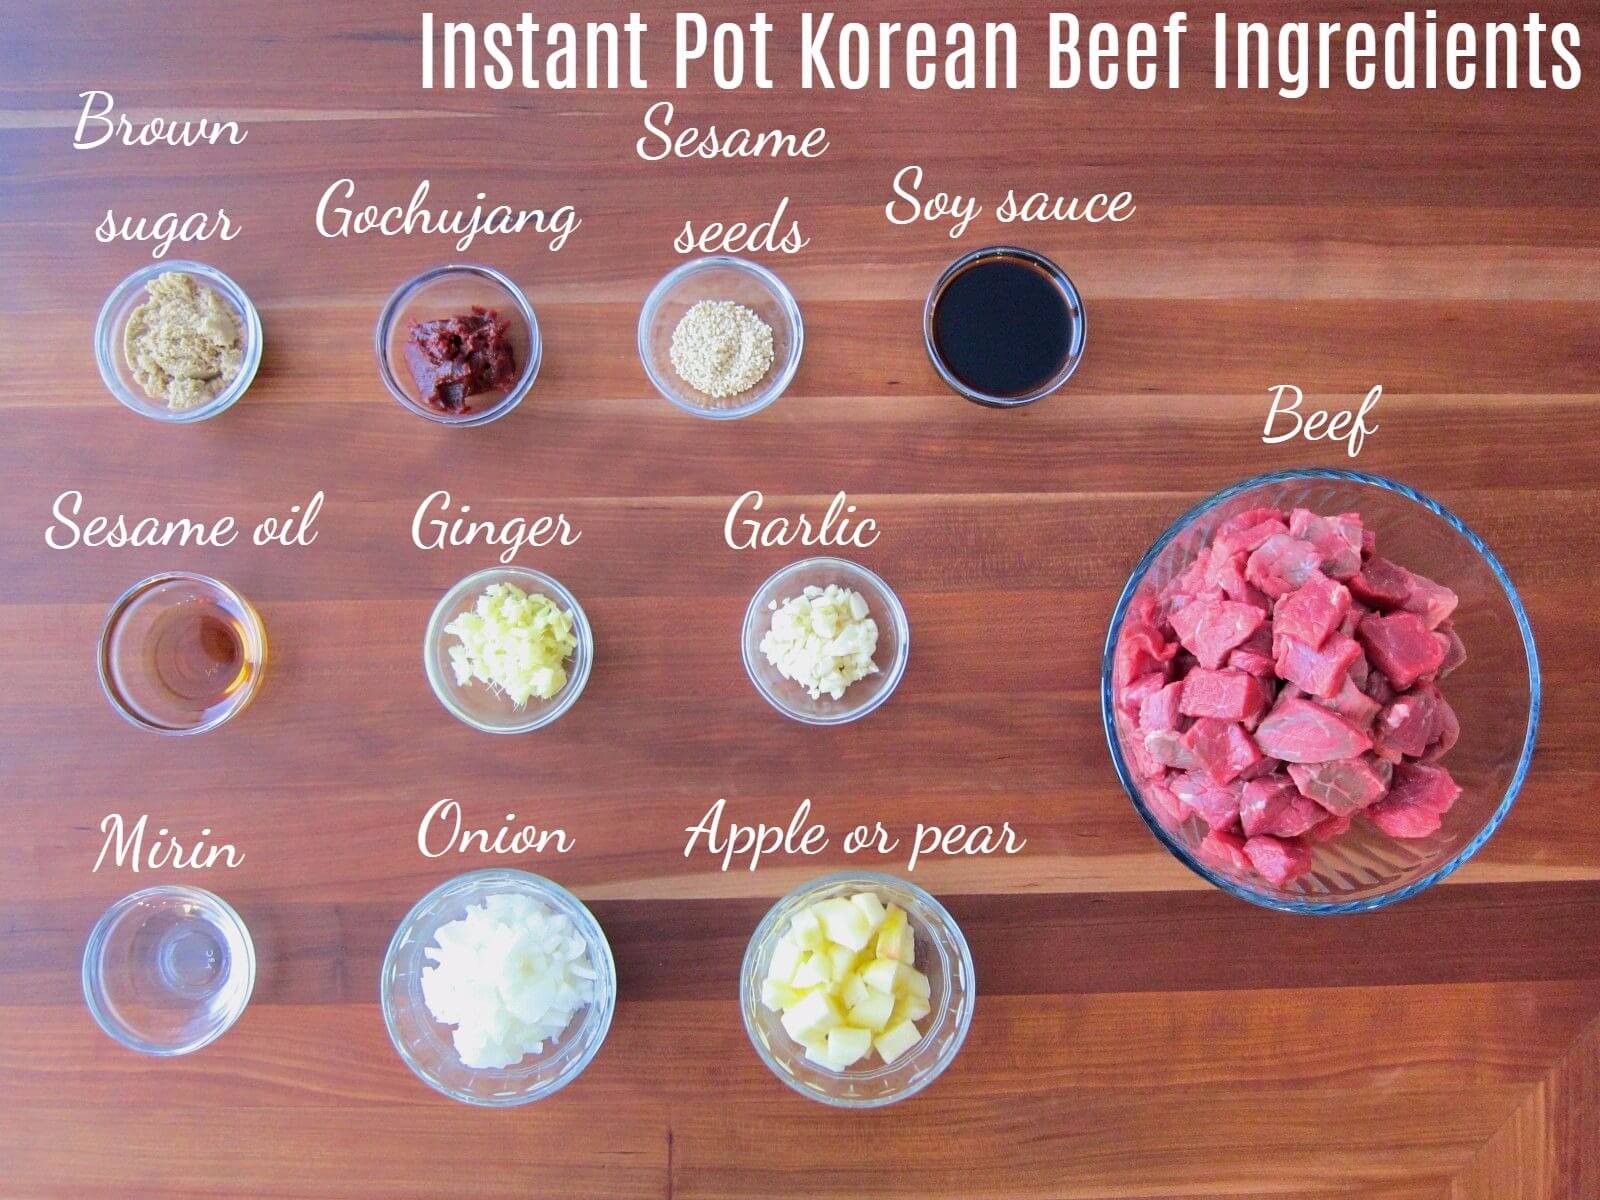 Instant Pot Korean Beef Ingredients - brown sugar, gochujang, sesame seeds, soy sauce, sesame oil, ginger, garlic, mirin, onion, apple, beef